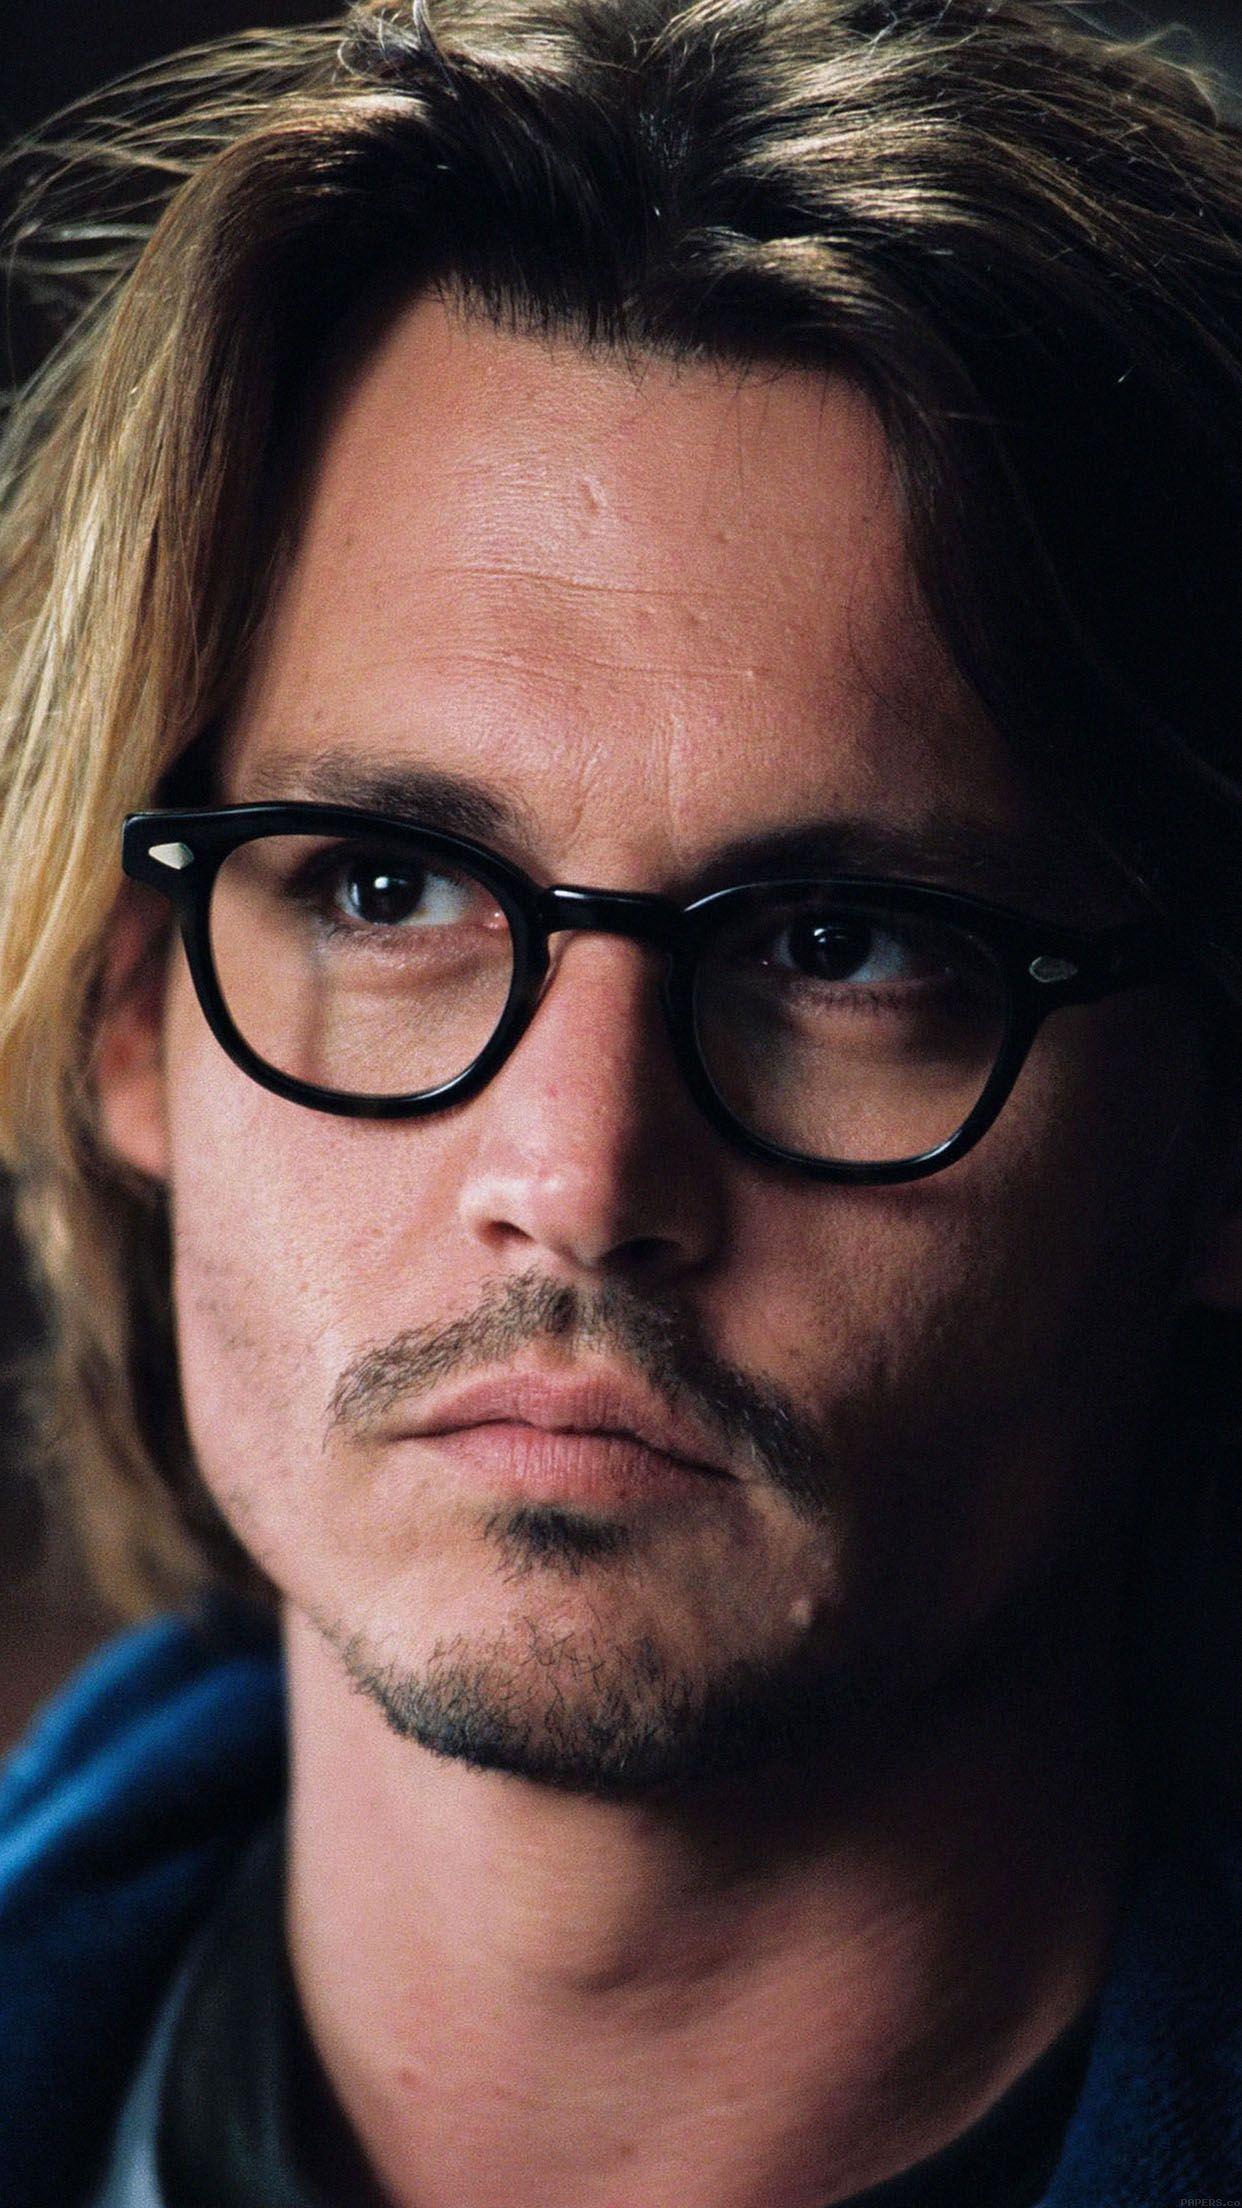 Wallpaper Johnny Depp Glass Film Actor Face Android wallpaper